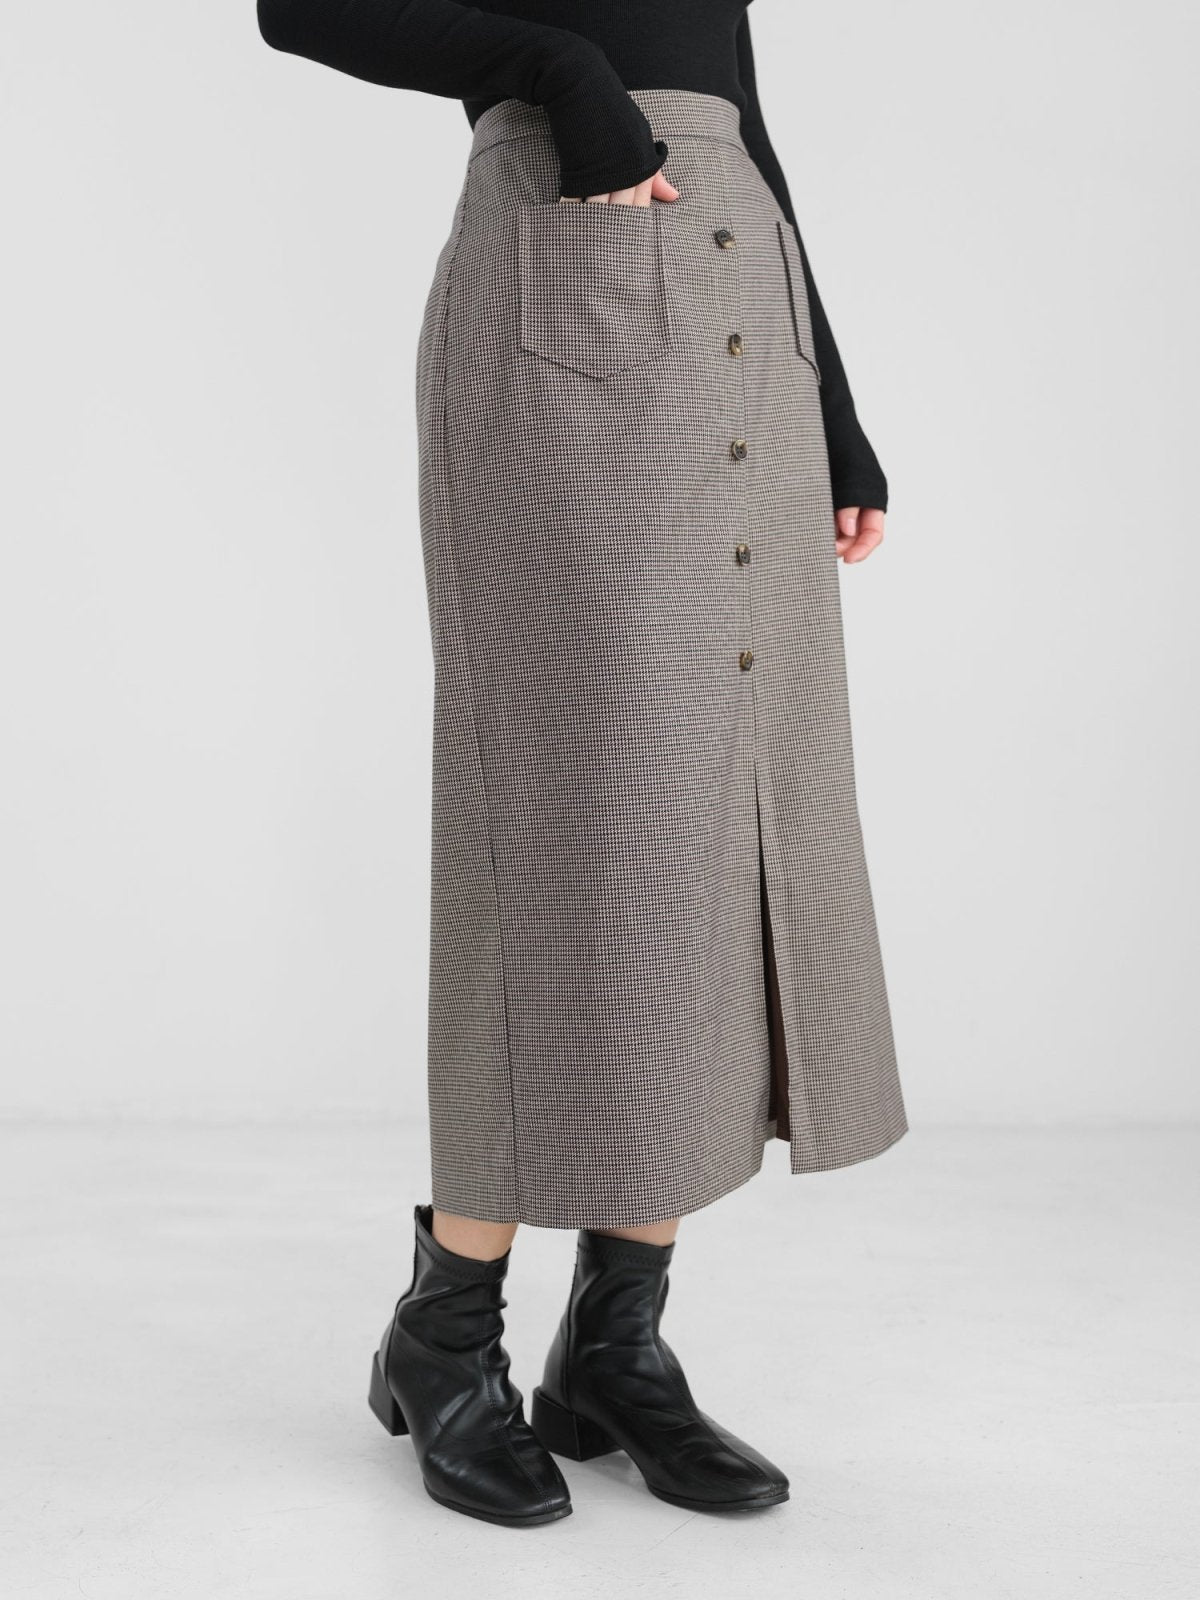 Valkyrie Buttoned Midi Skirt - DAG-DD1303-23DarkHoundtoothS - Dark Houndtooth - S - D'zage Designs